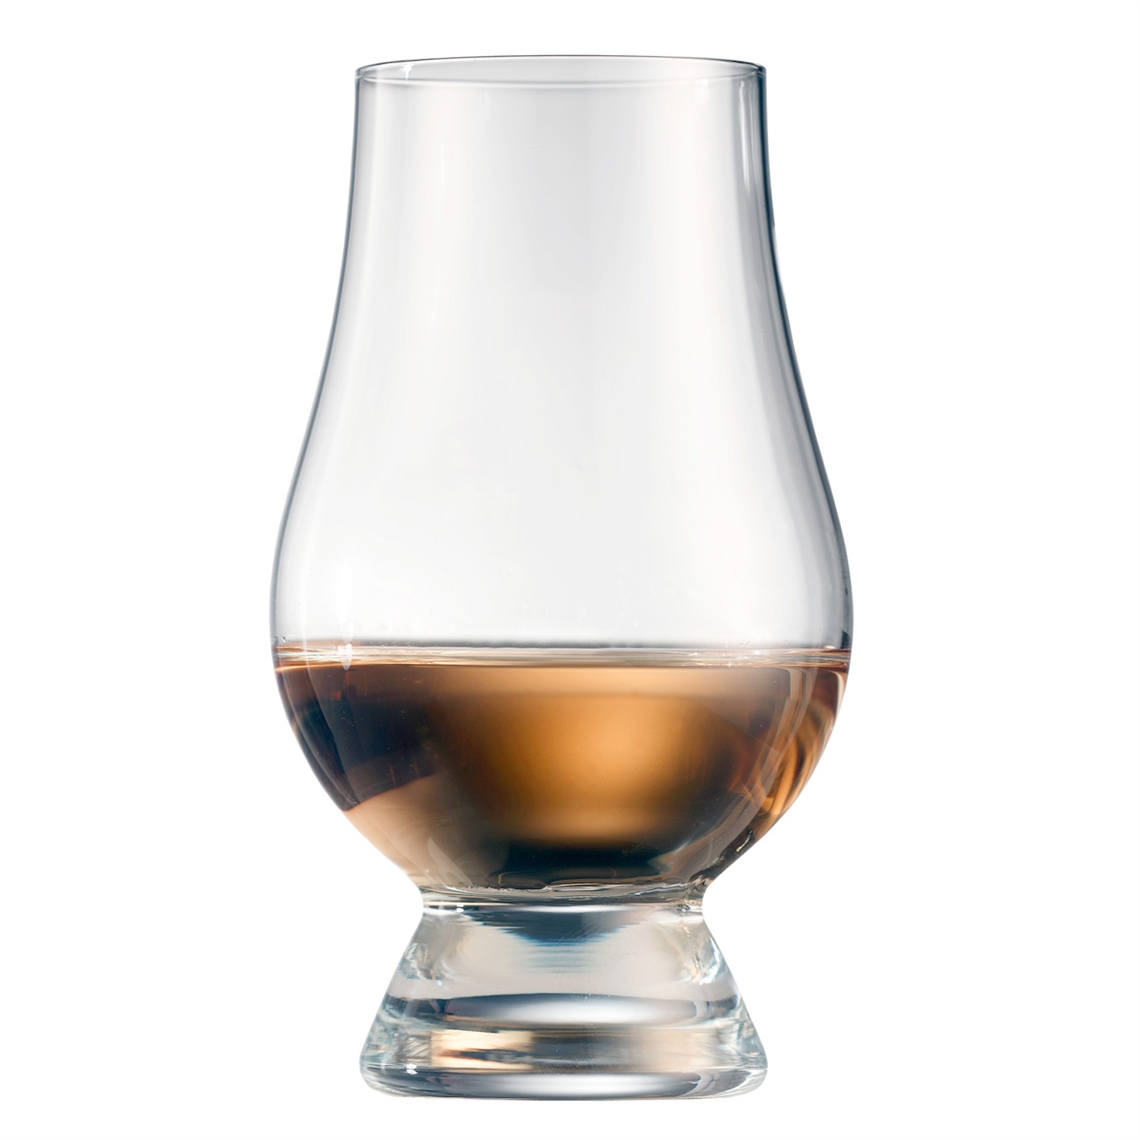 View more wine tasting glasses from our Whisky Glasses range